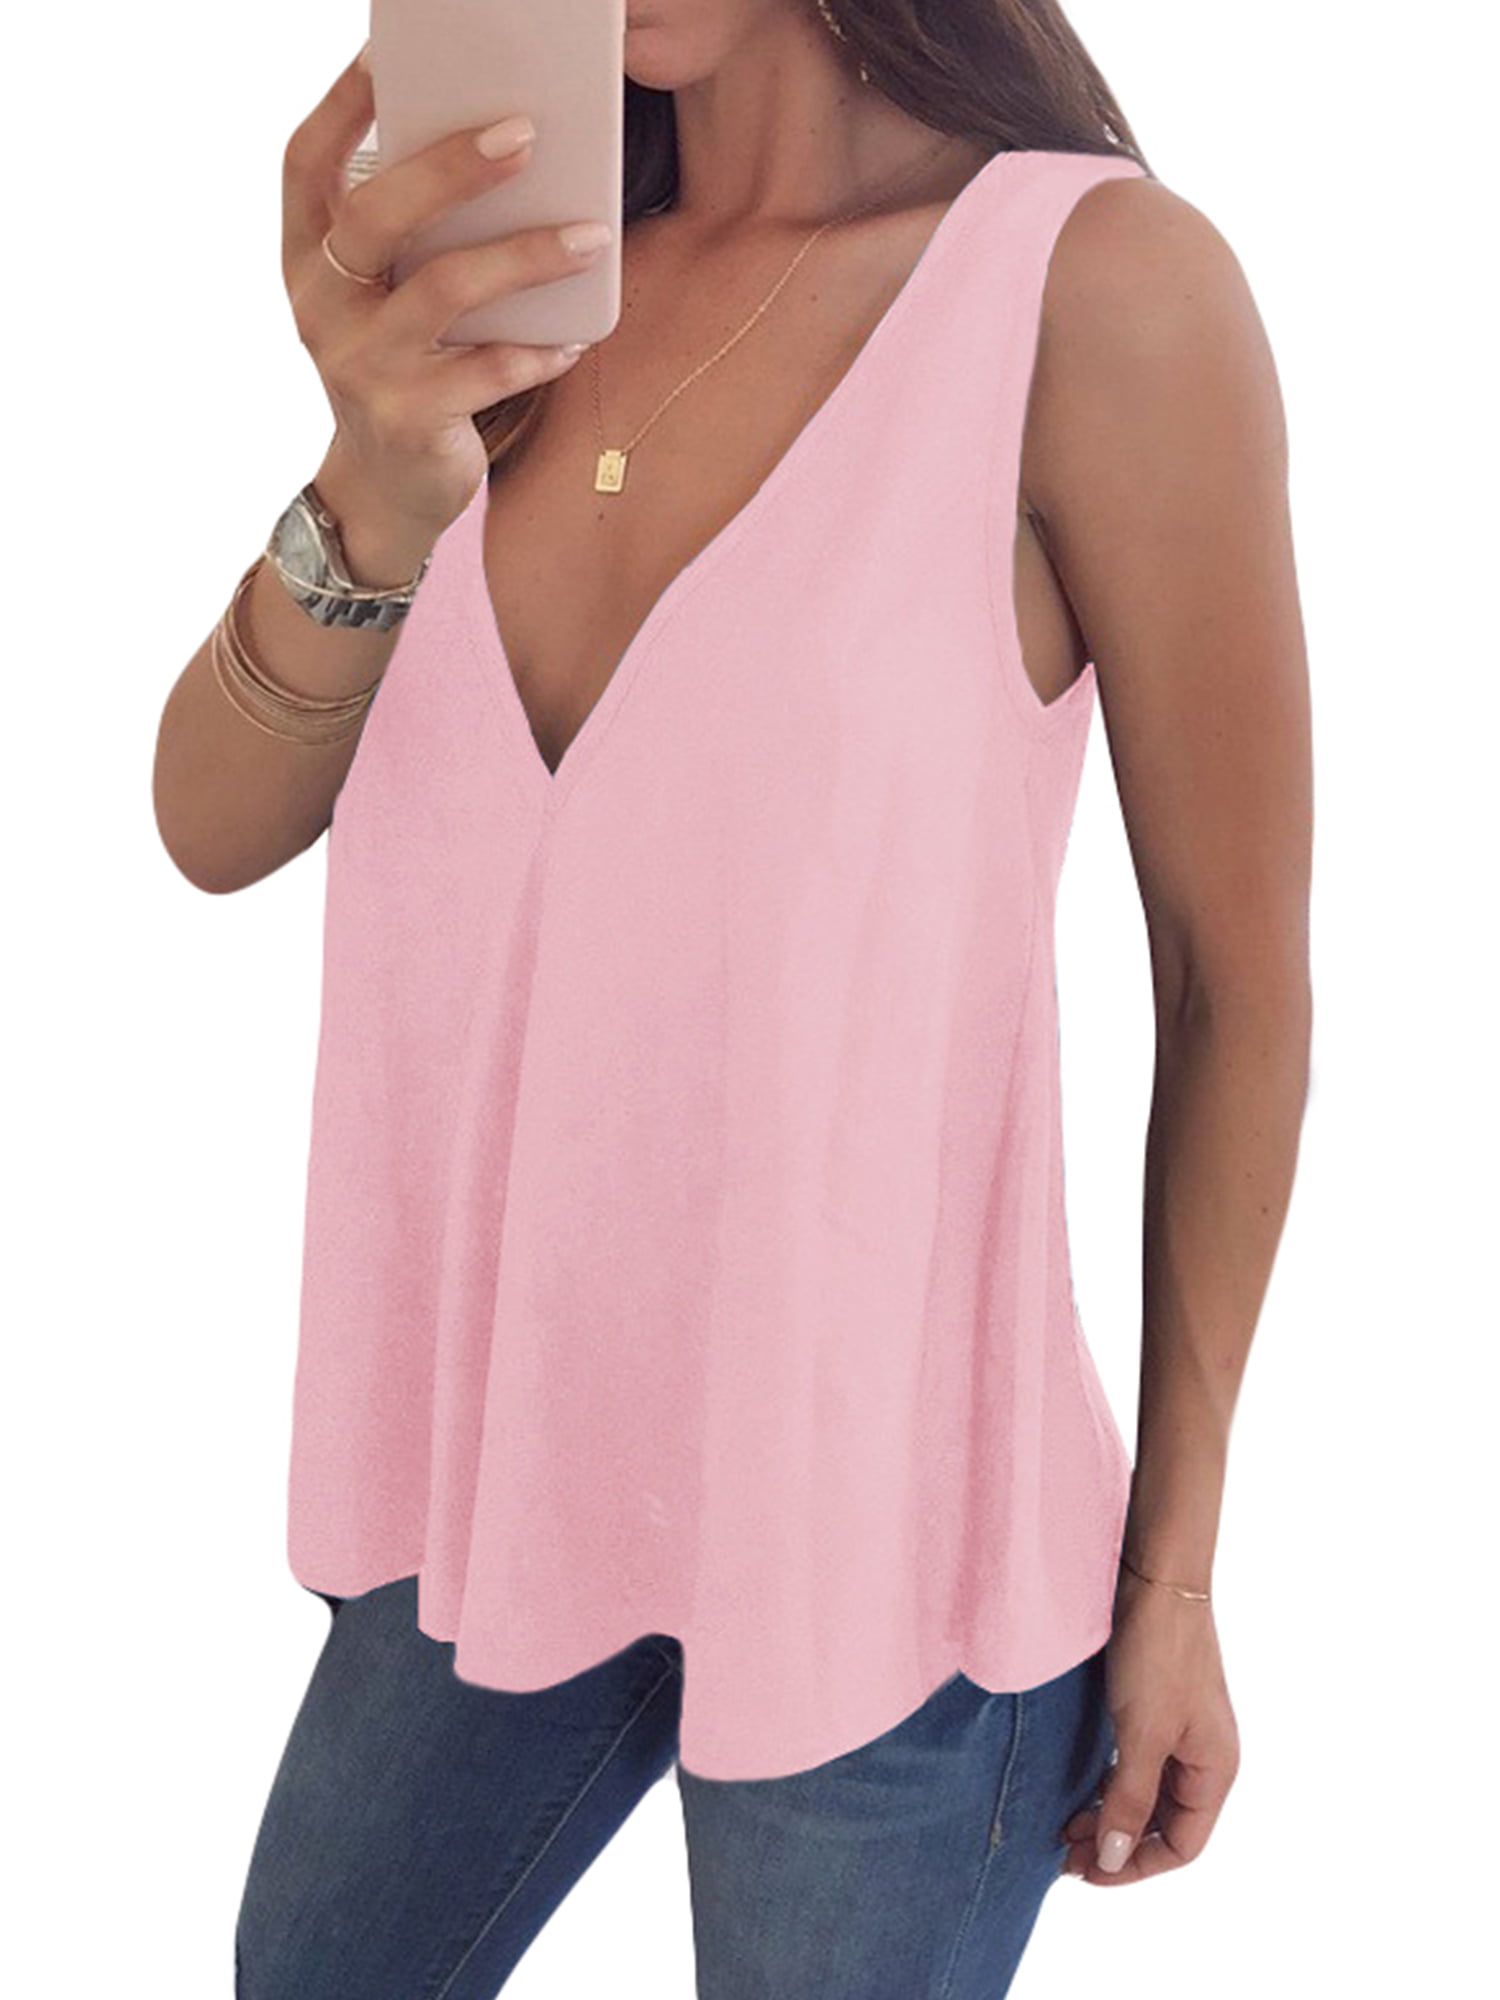 AlvaQ Women Summer Halter Chiffon Tank Tops Casual Sleeveless Shirts Blouses